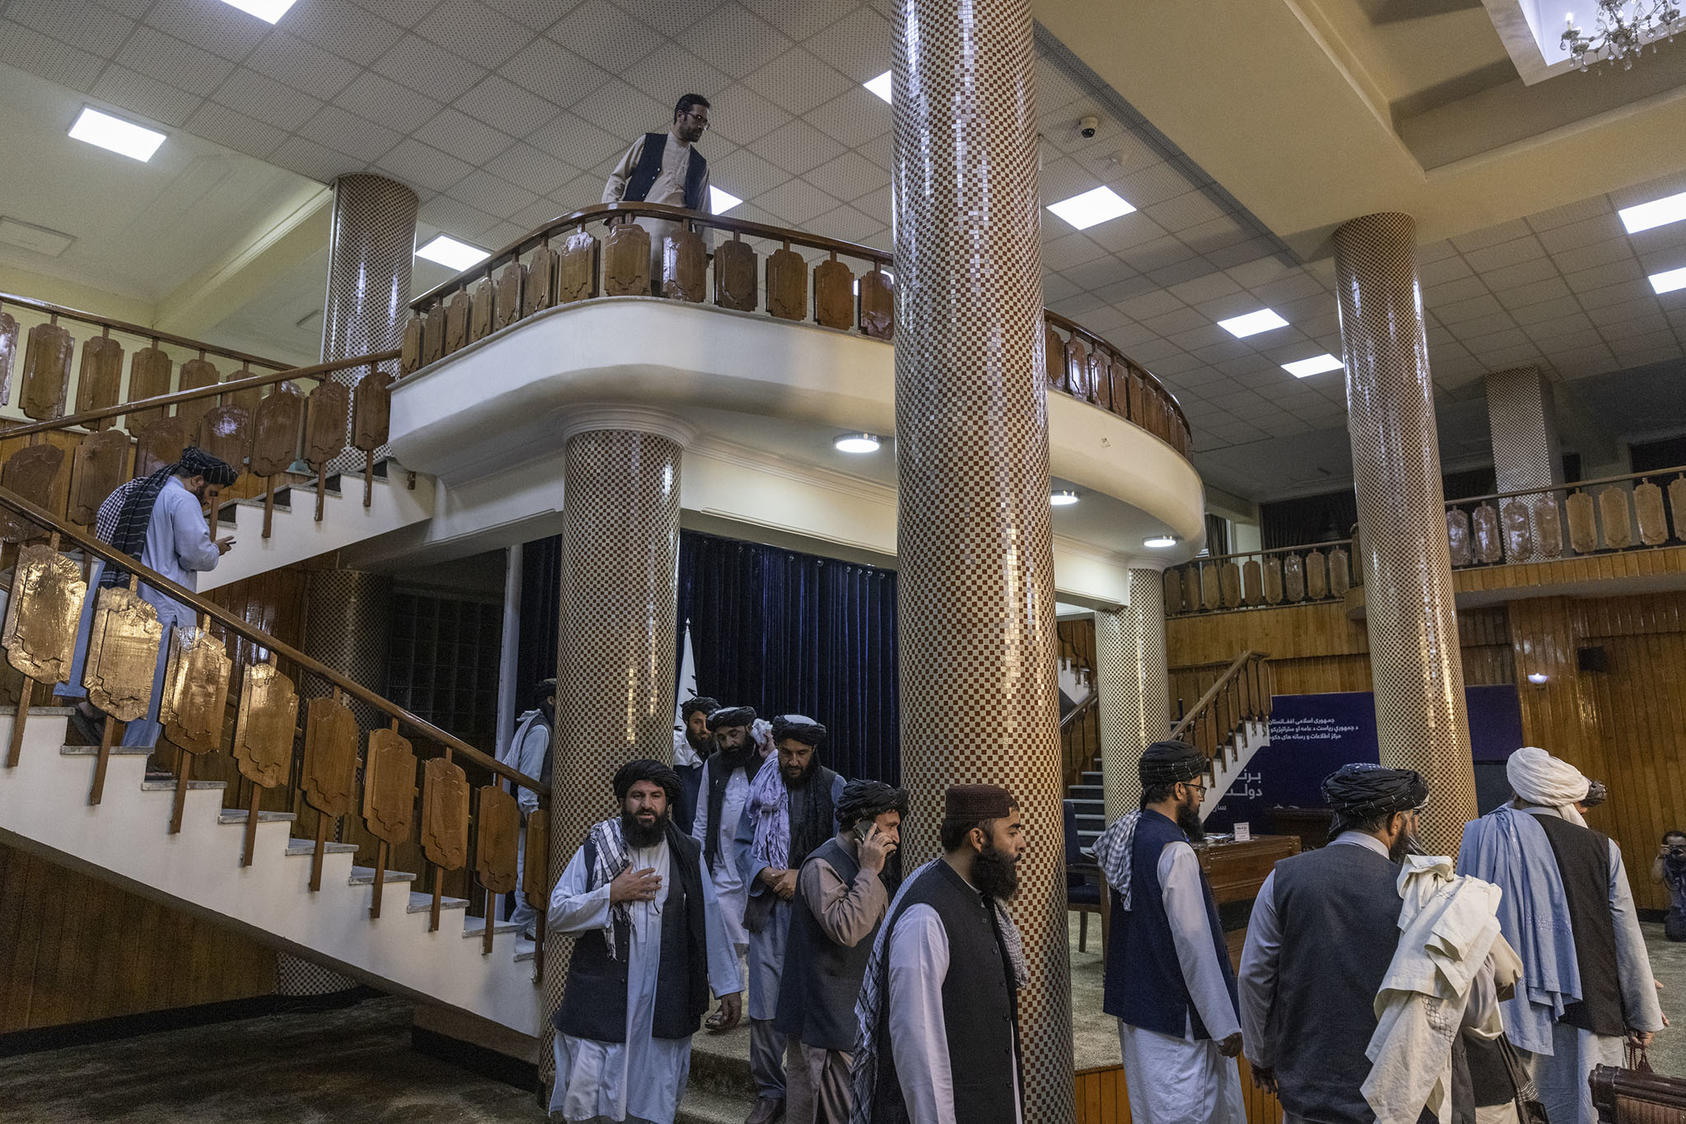 Taliban Seek Recognition, But Offer Few Concessions to International Concerns - September 28, 2021
